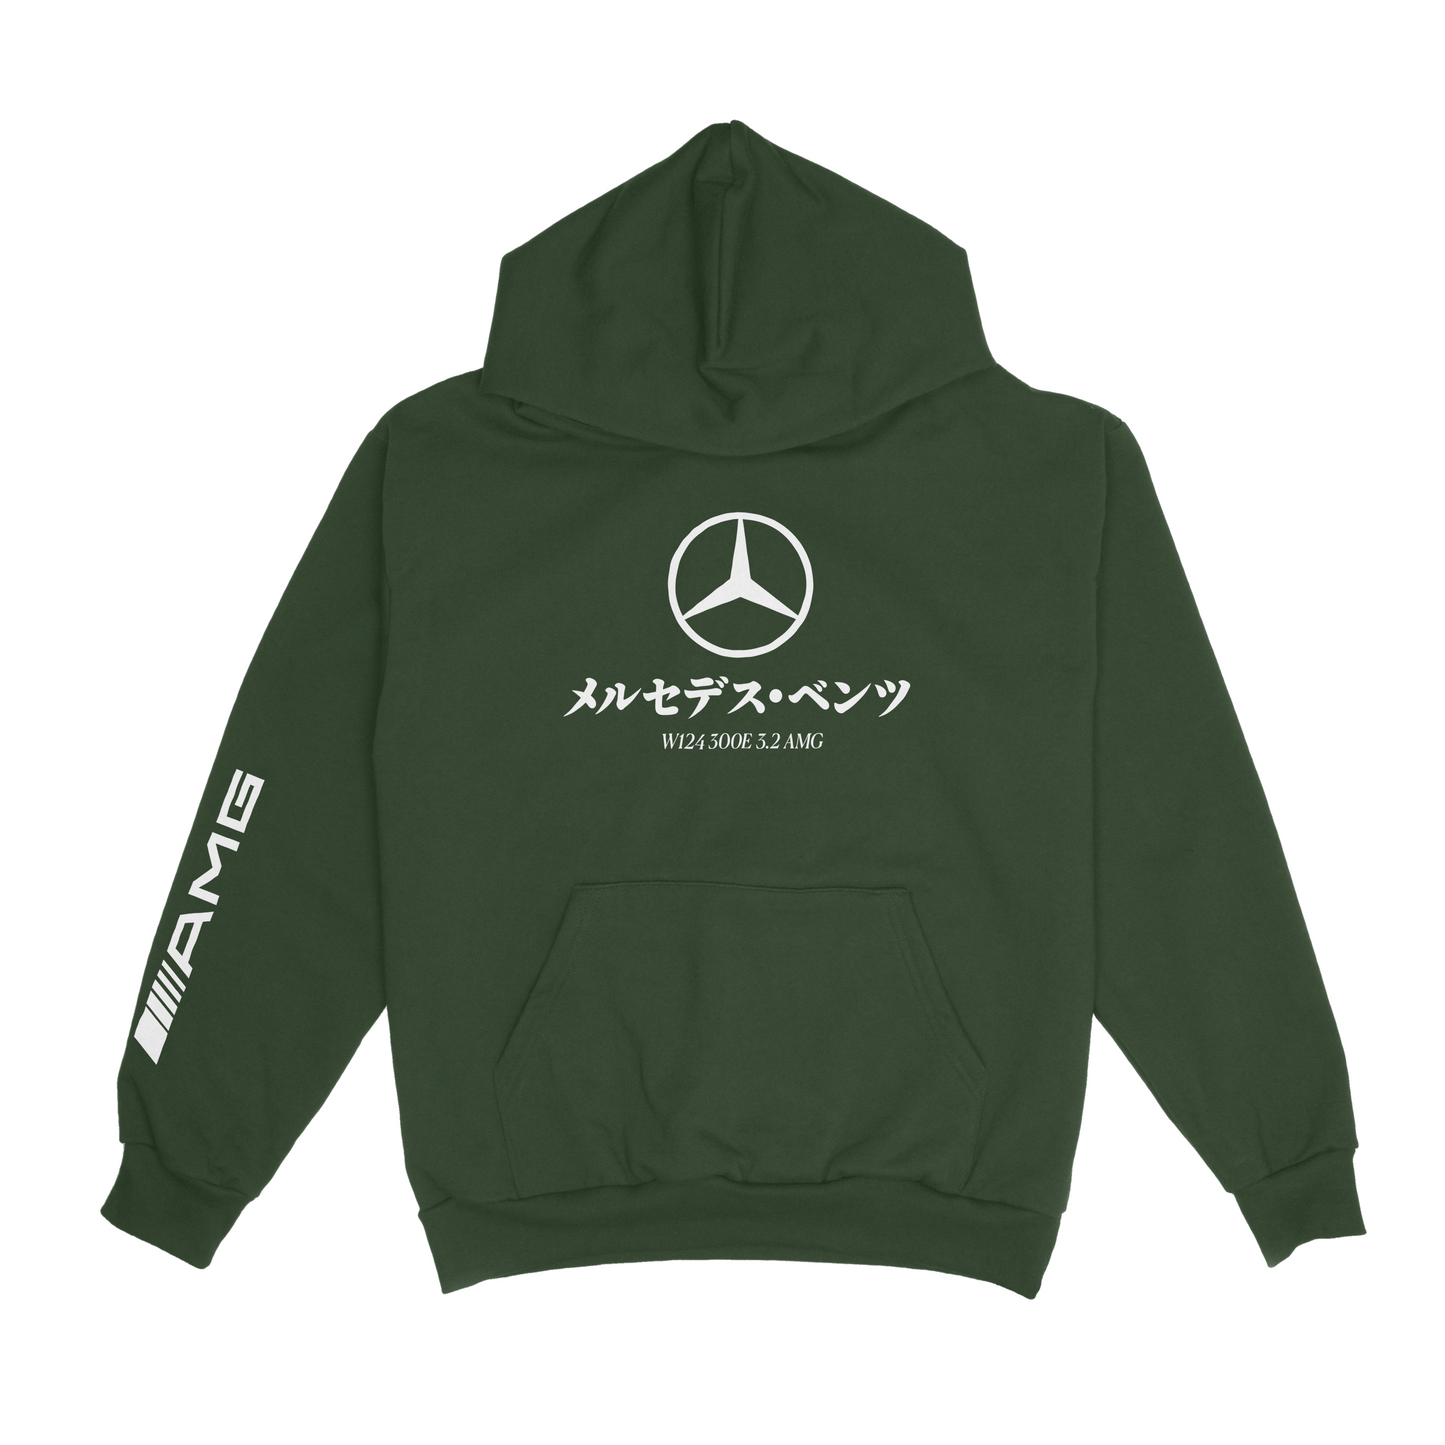 Mercedes Benz Japan Hoodie - Pine Green